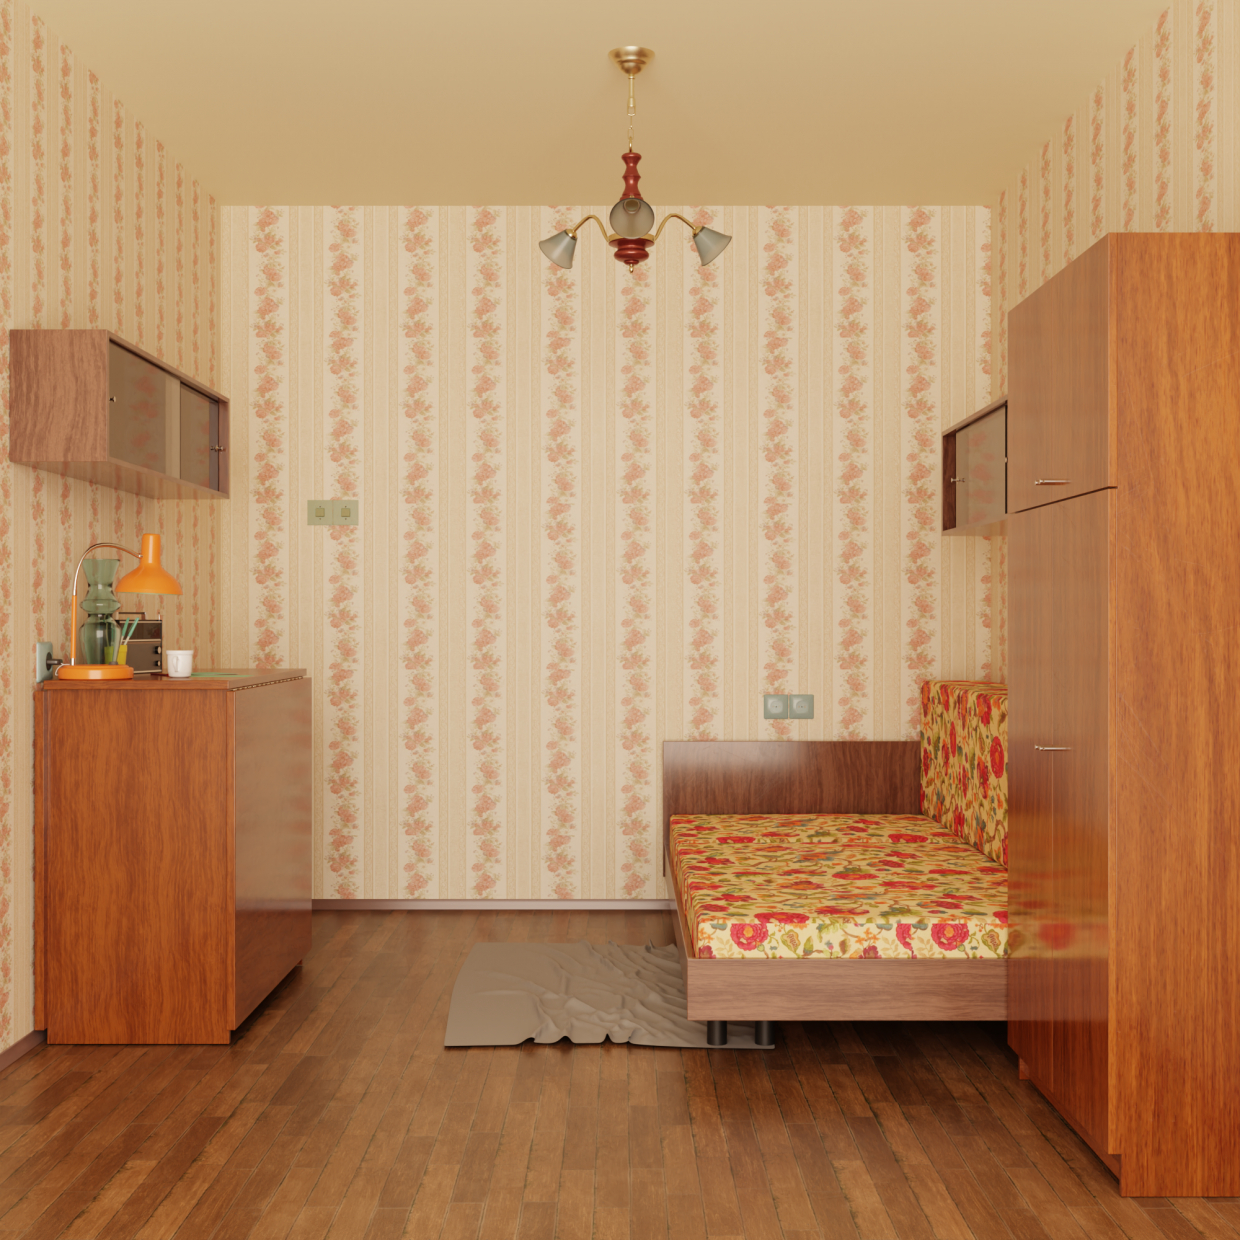 Soviet apartment in Blender cycles render image